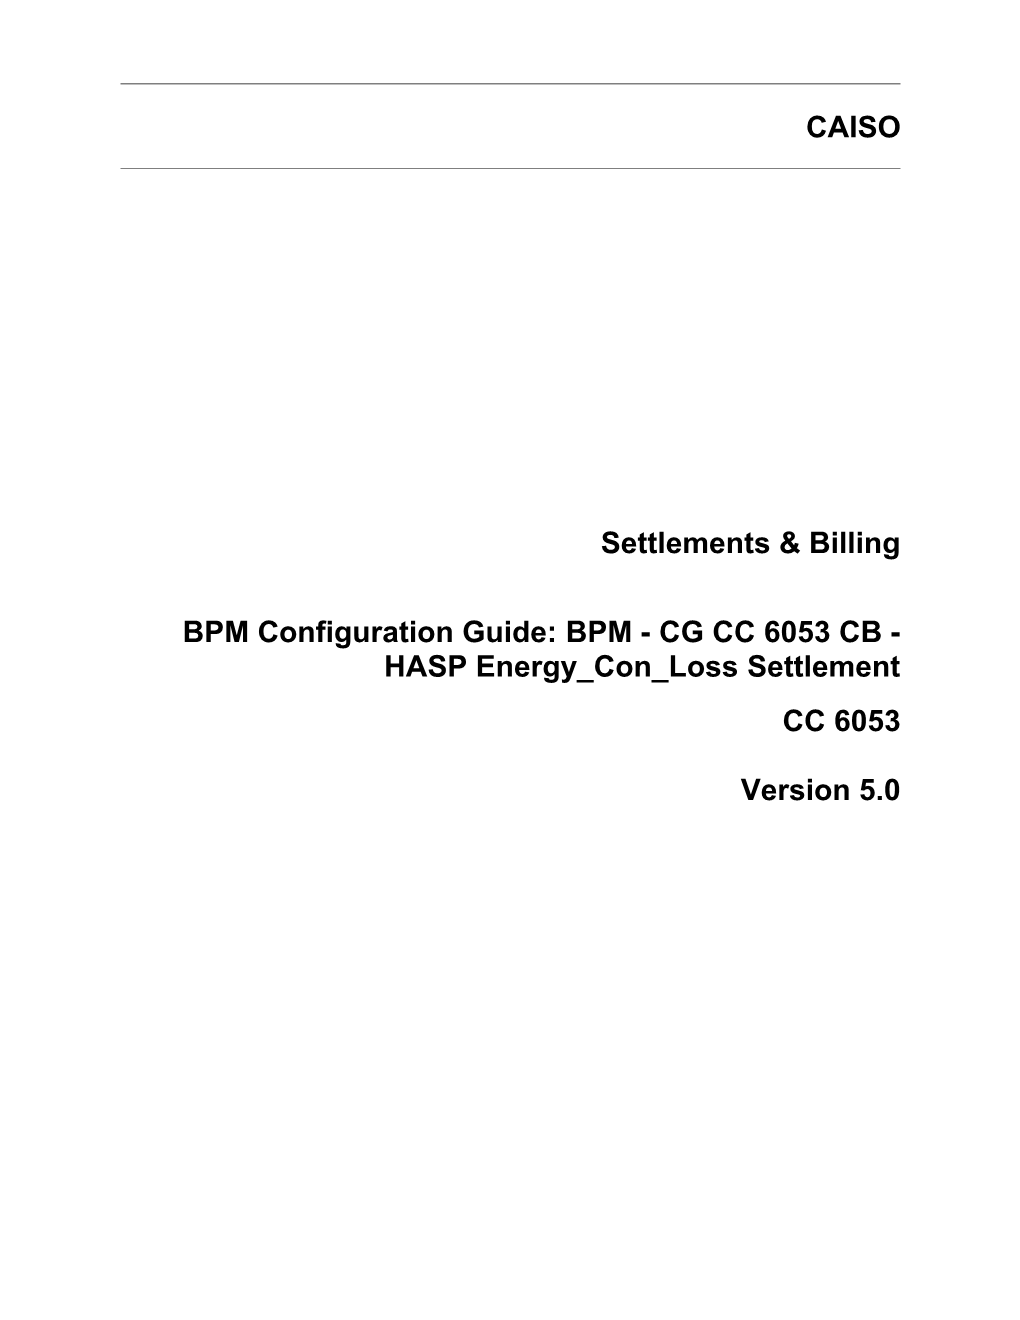 BPM - CG CC 6053 CB - HASP Energy Con Loss Settlement